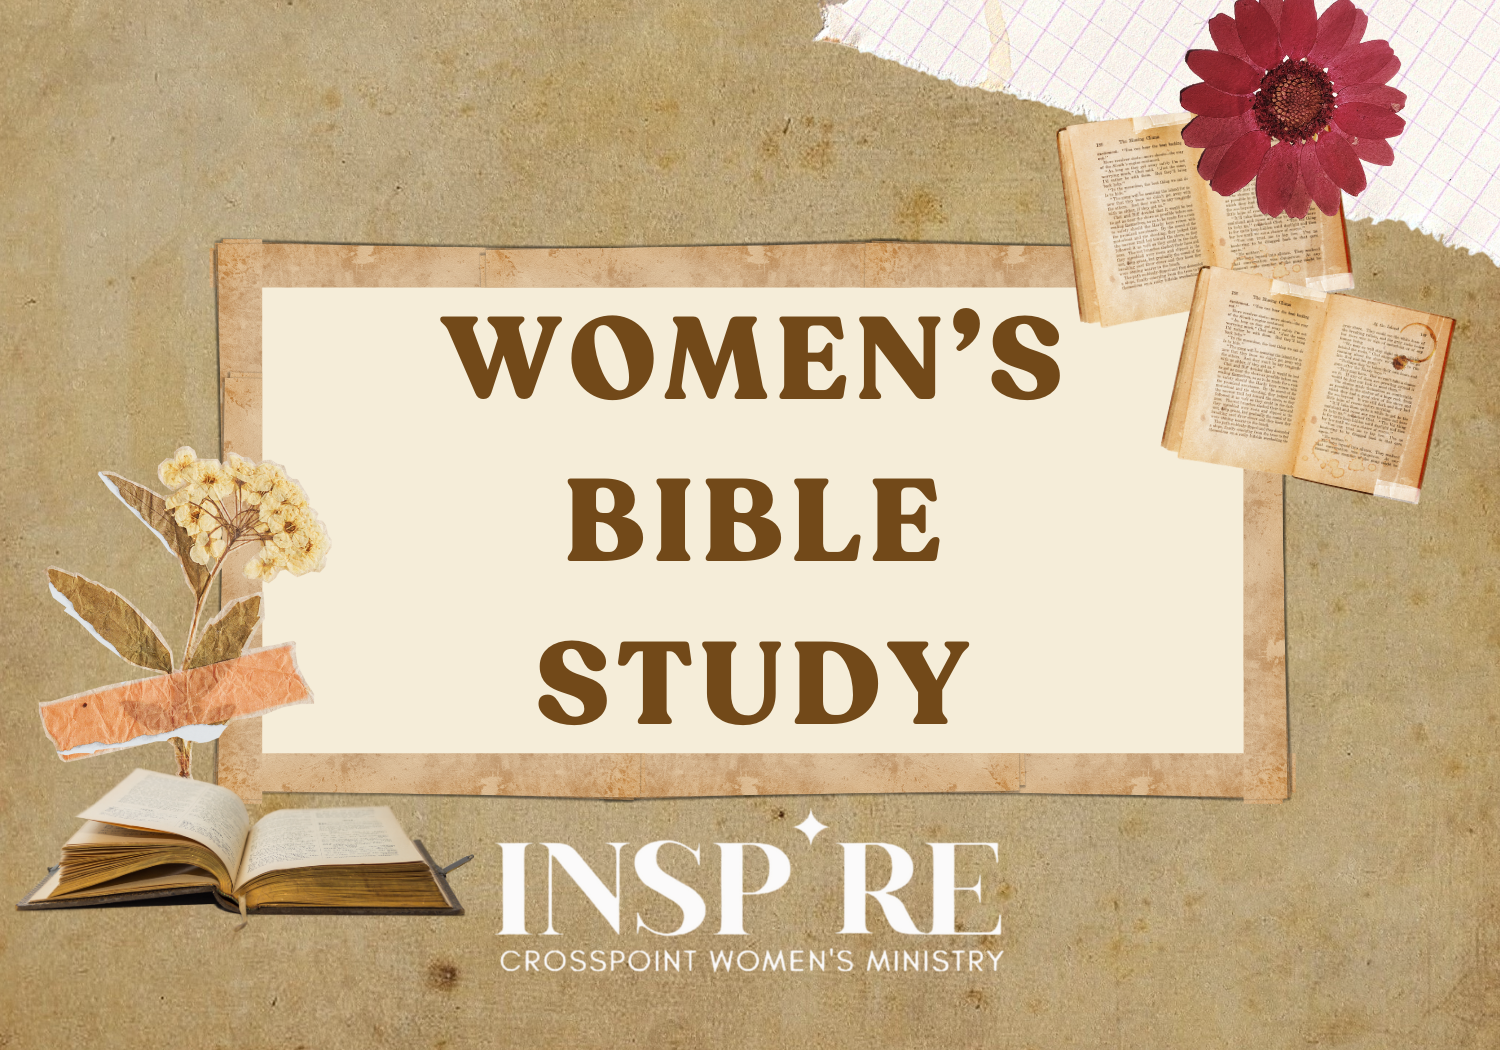 WOMEN'S BIBLE STUDY